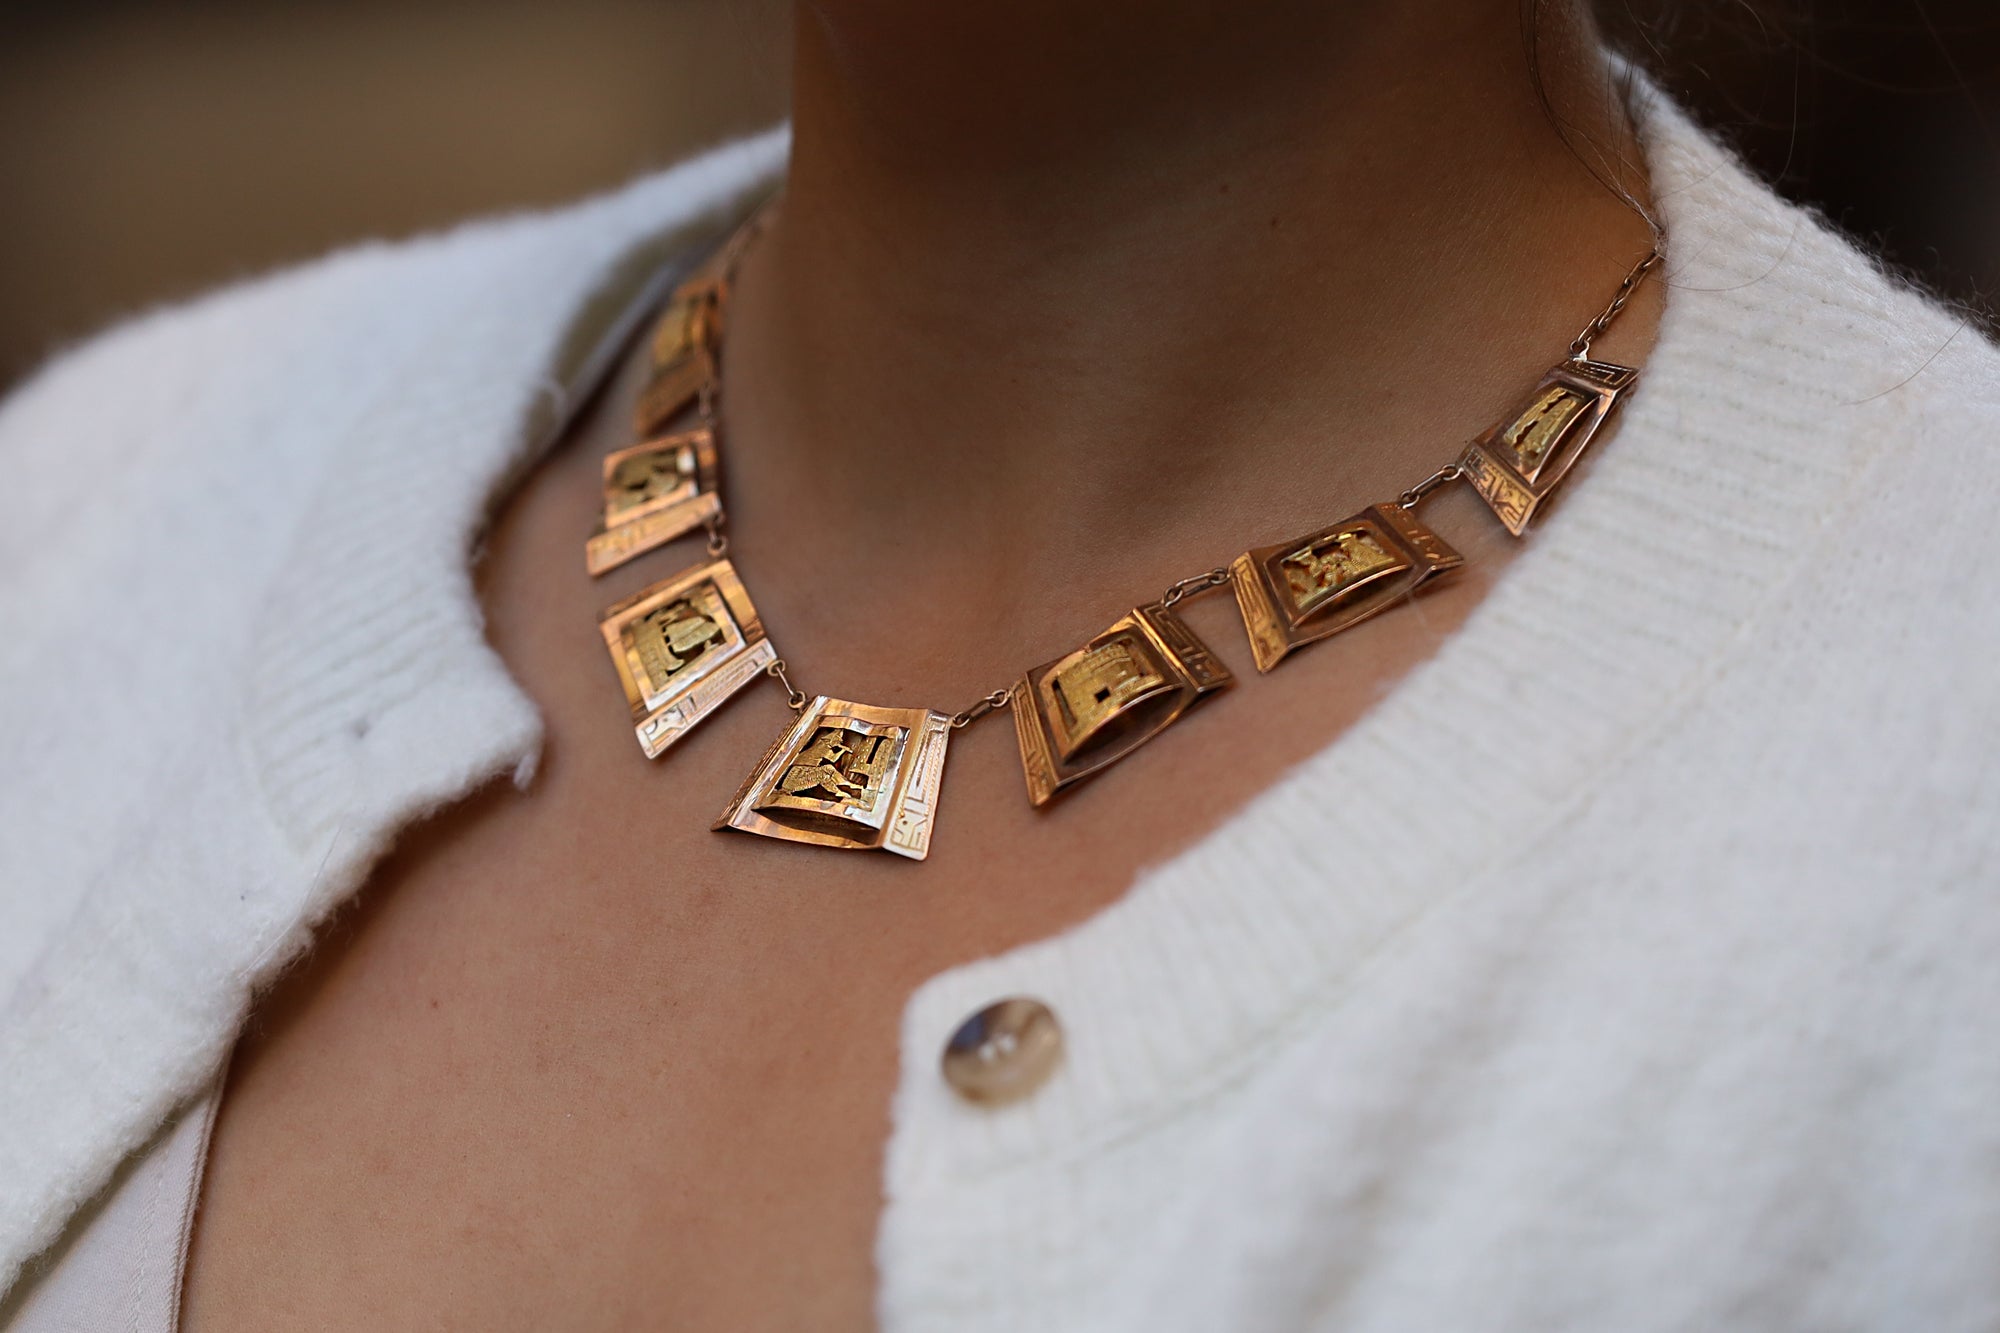 Vintage High Karat Gold Mayan Peruvian Story Necklace